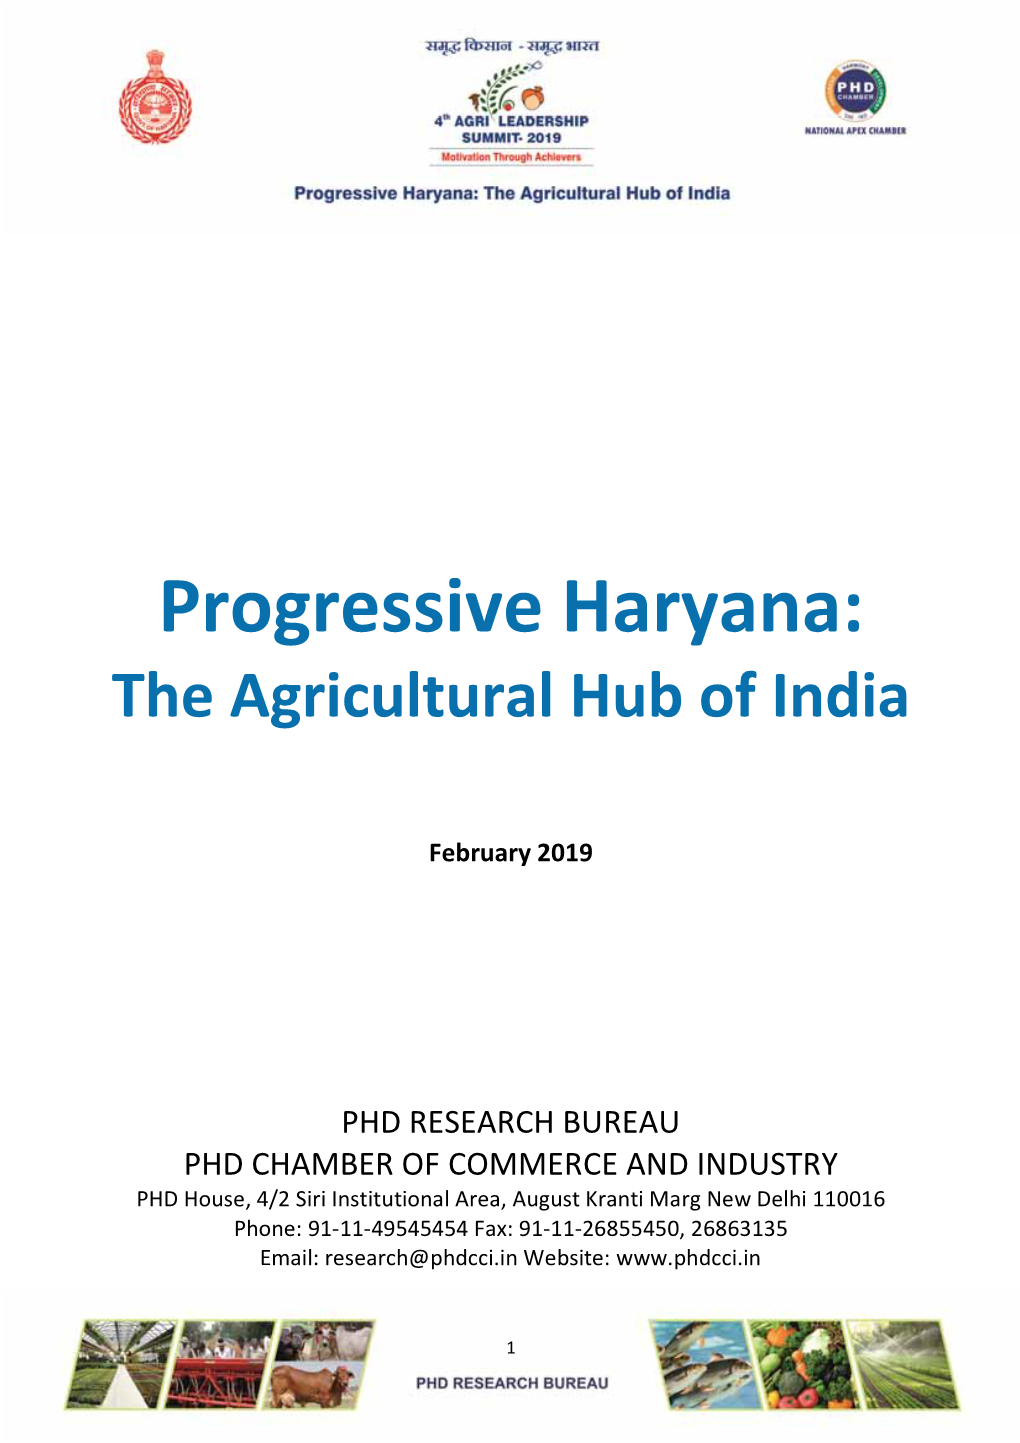 Progressive Haryana the Agricultural Hub of India